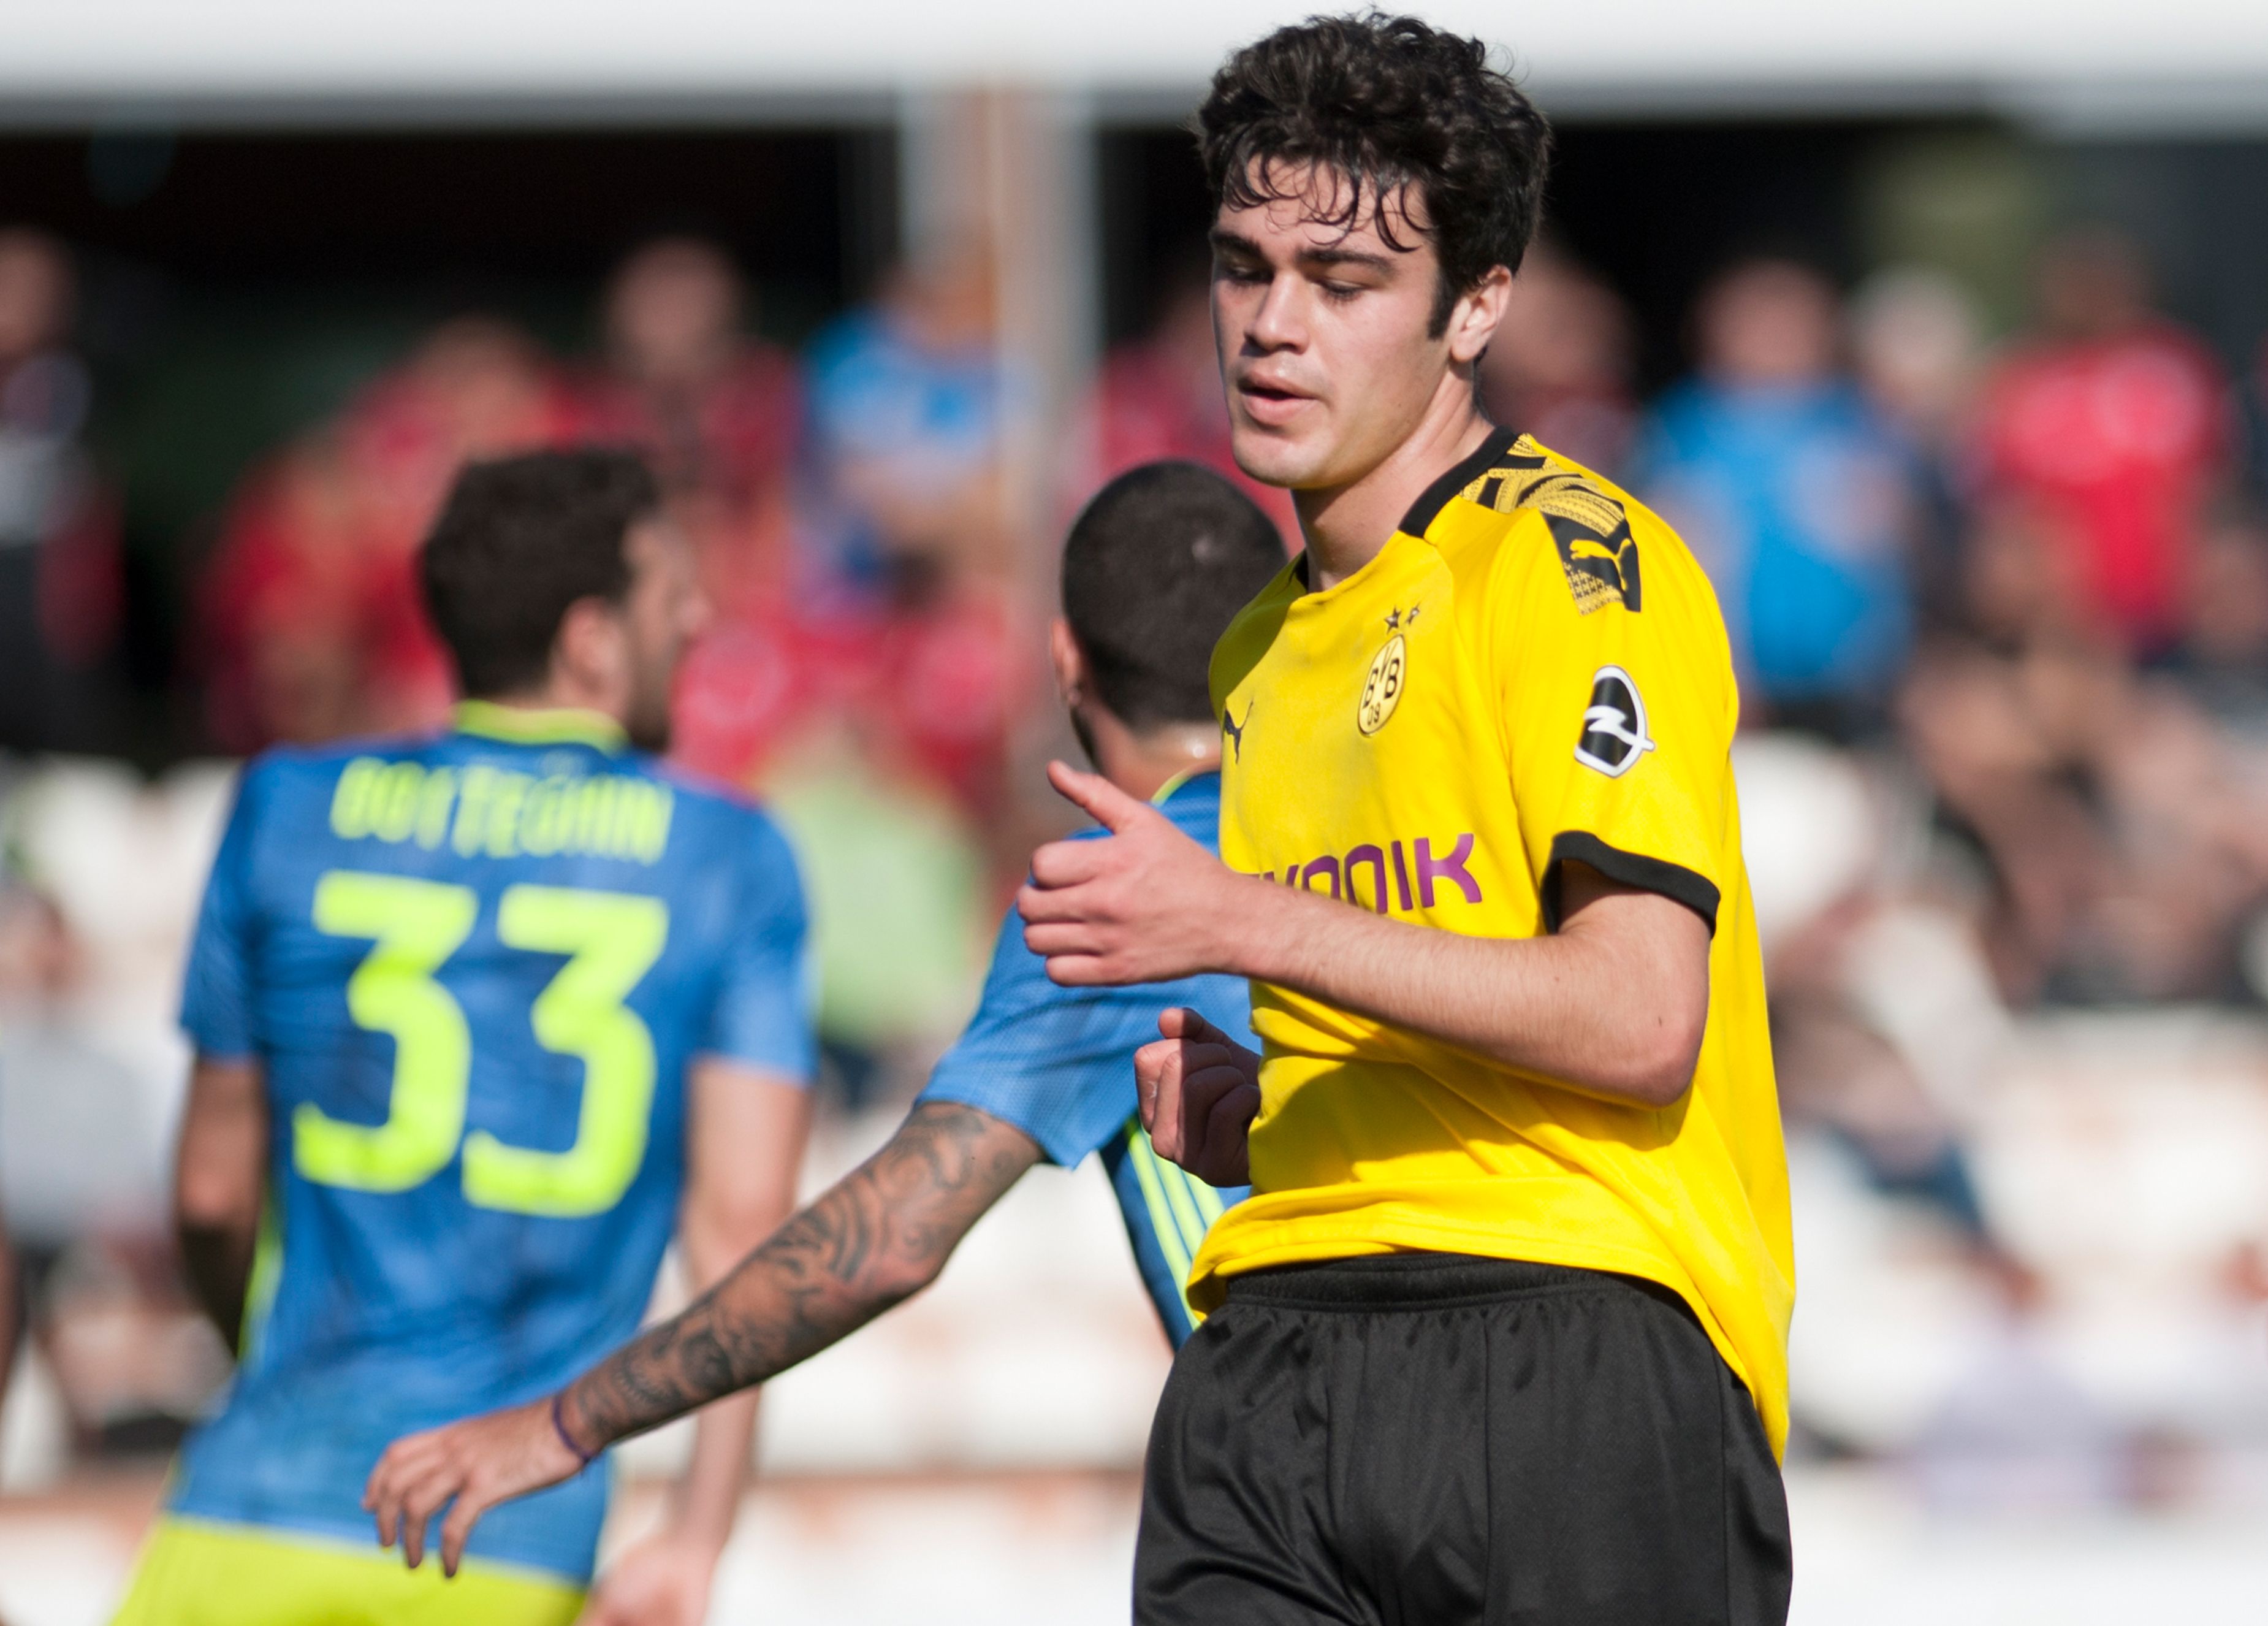 Giovanni Reyna of Borussia Dortmund U19 controls the ball during